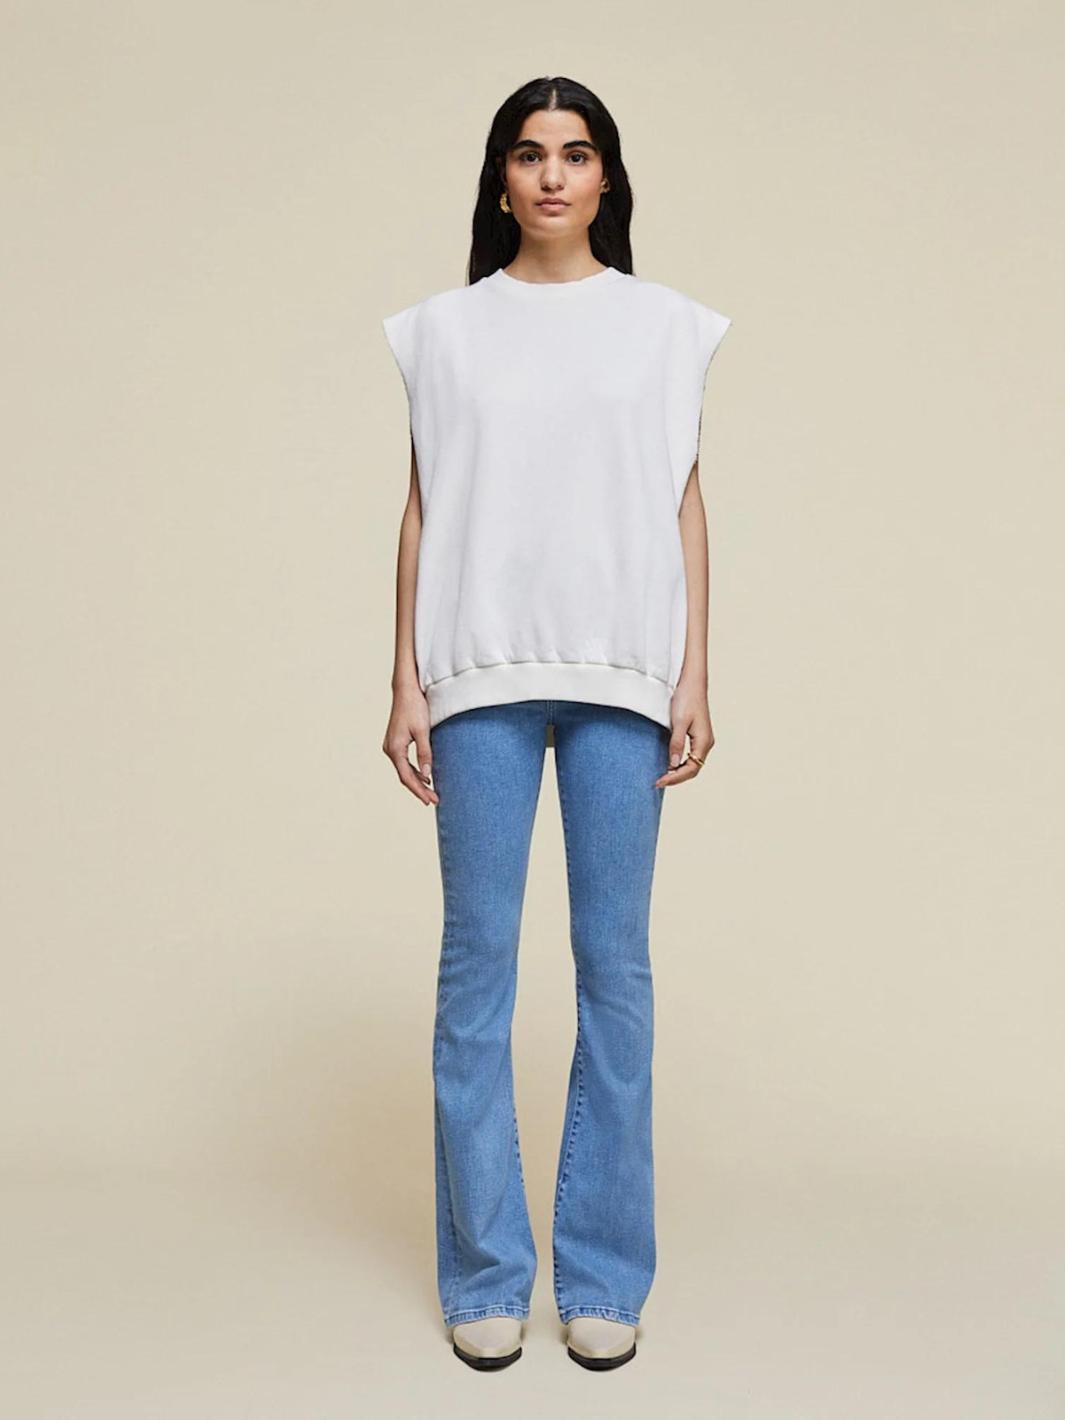 Lois Jeans Jeans | Raval Hyper Ladywash Sky Bleach